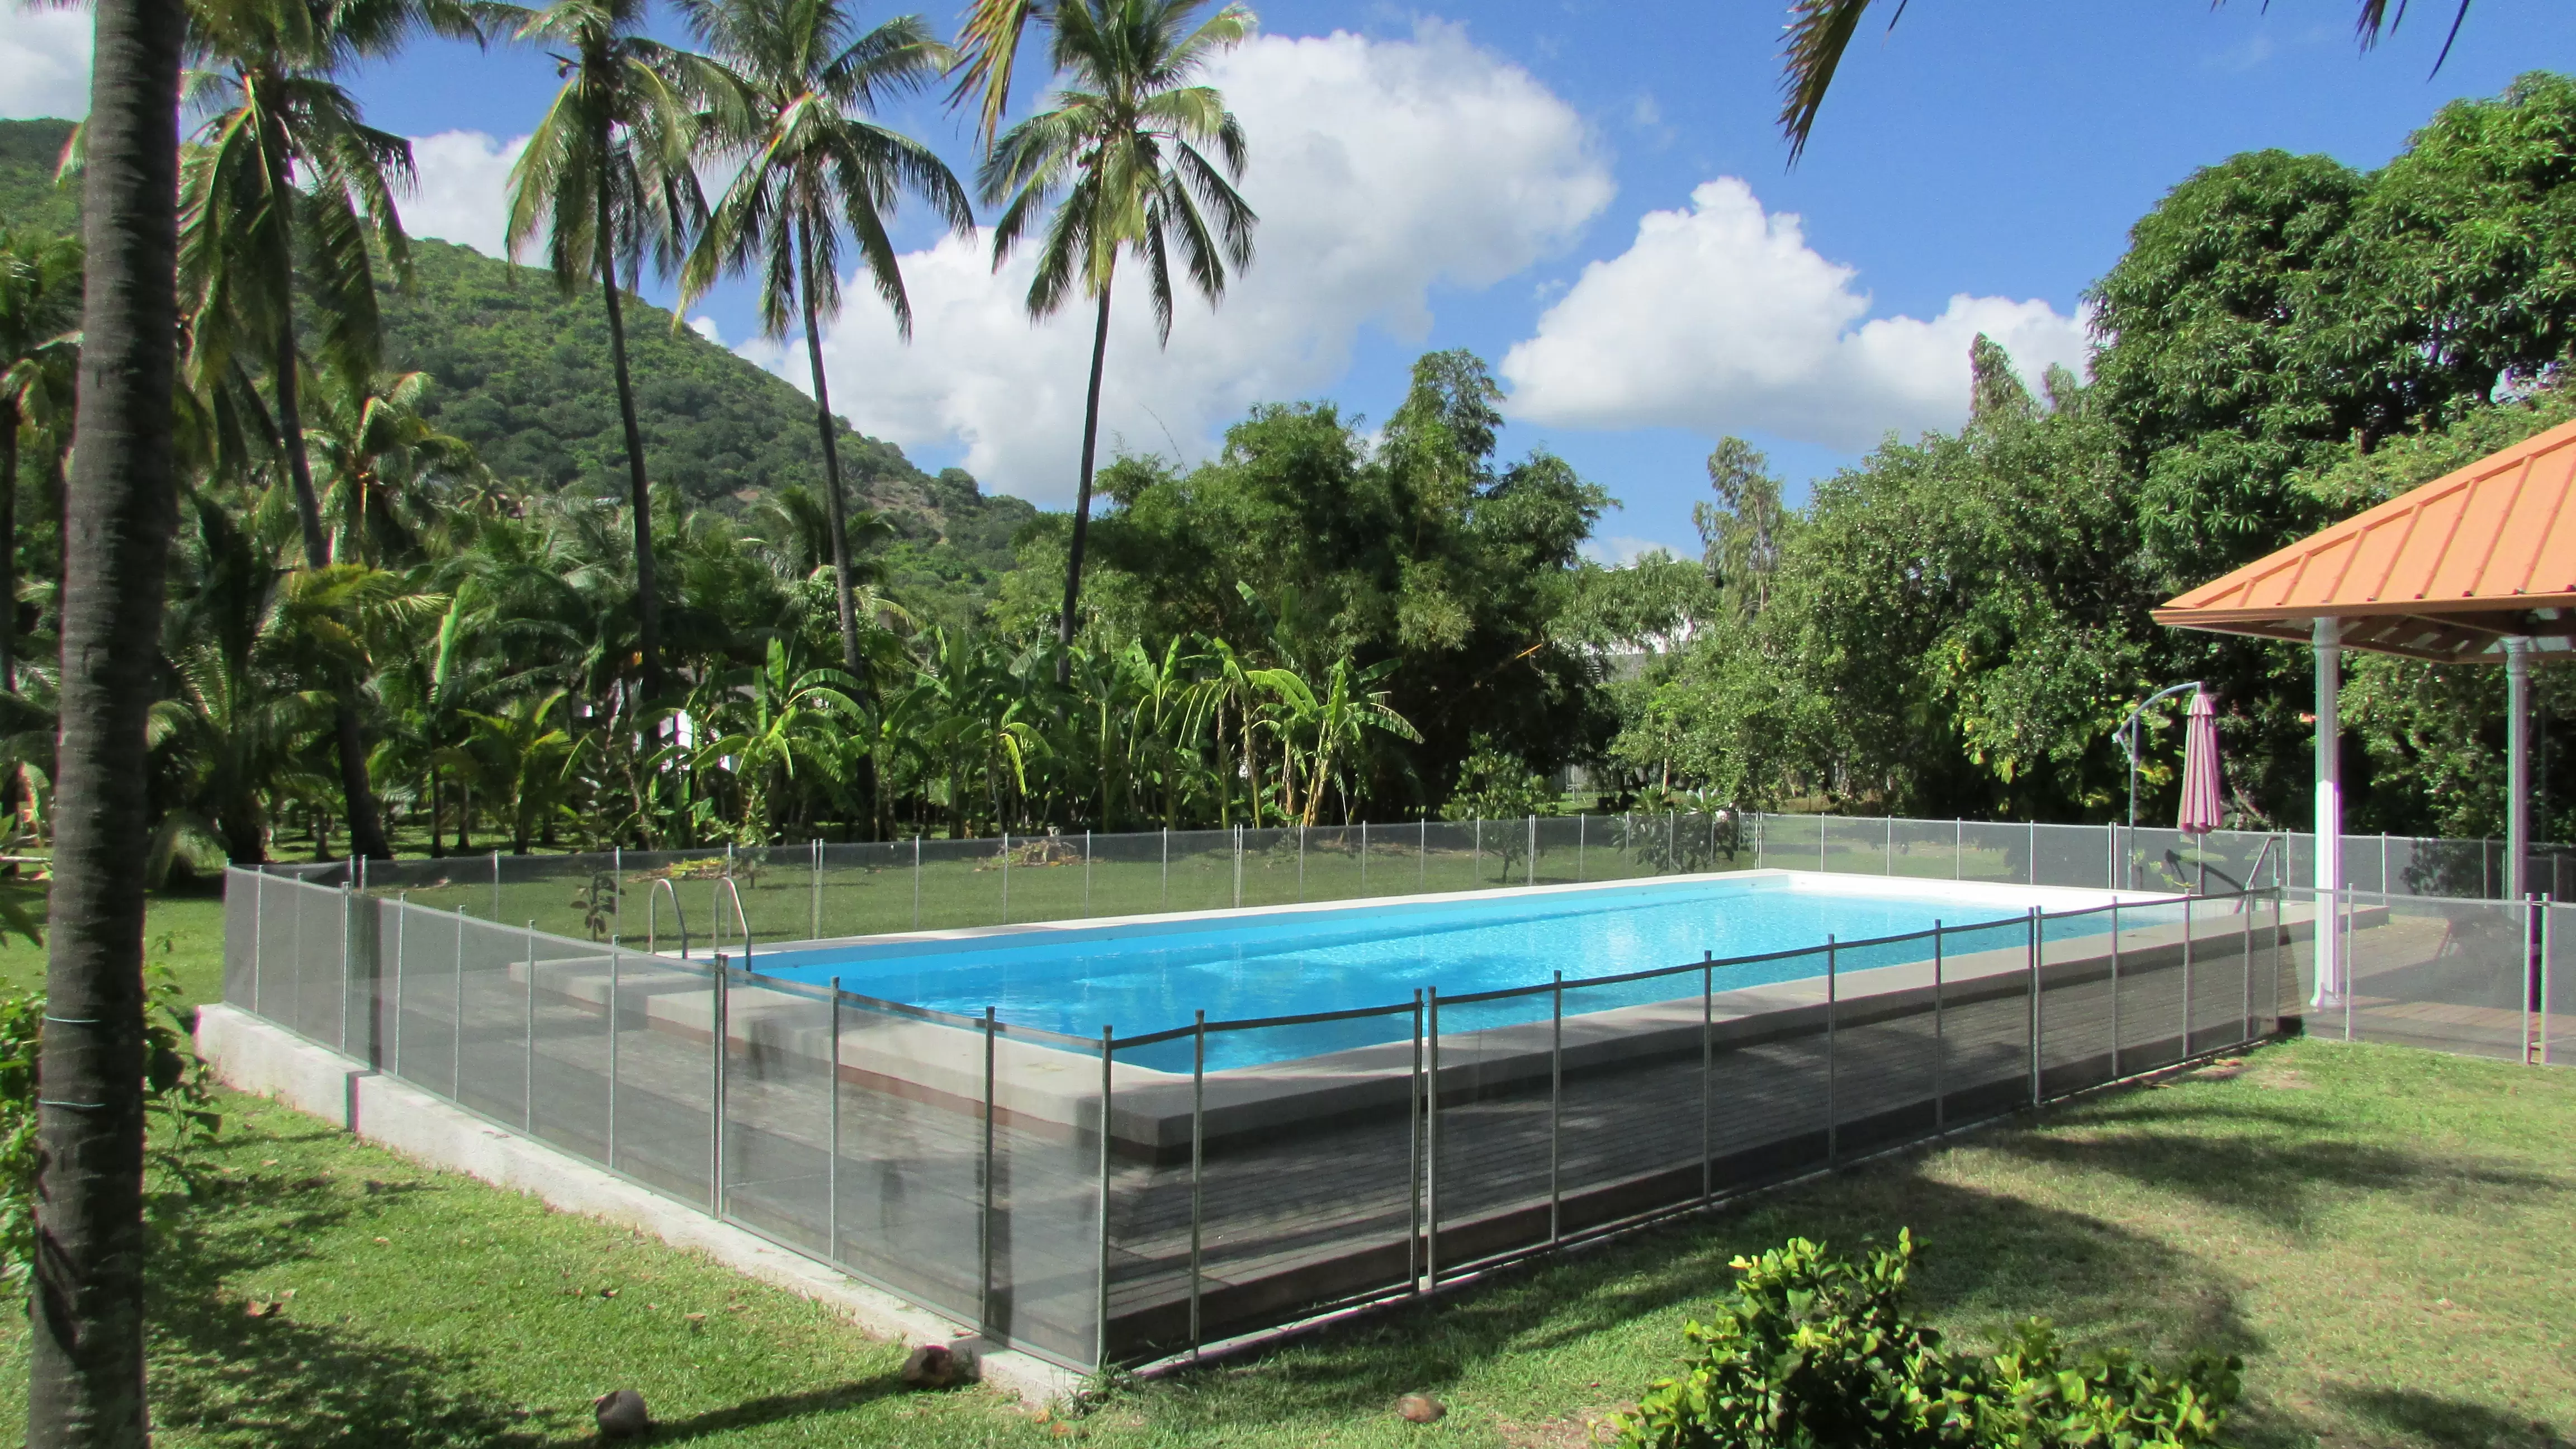 Swimming Pool Company in Mauritius - WaterPleasures Mauritius